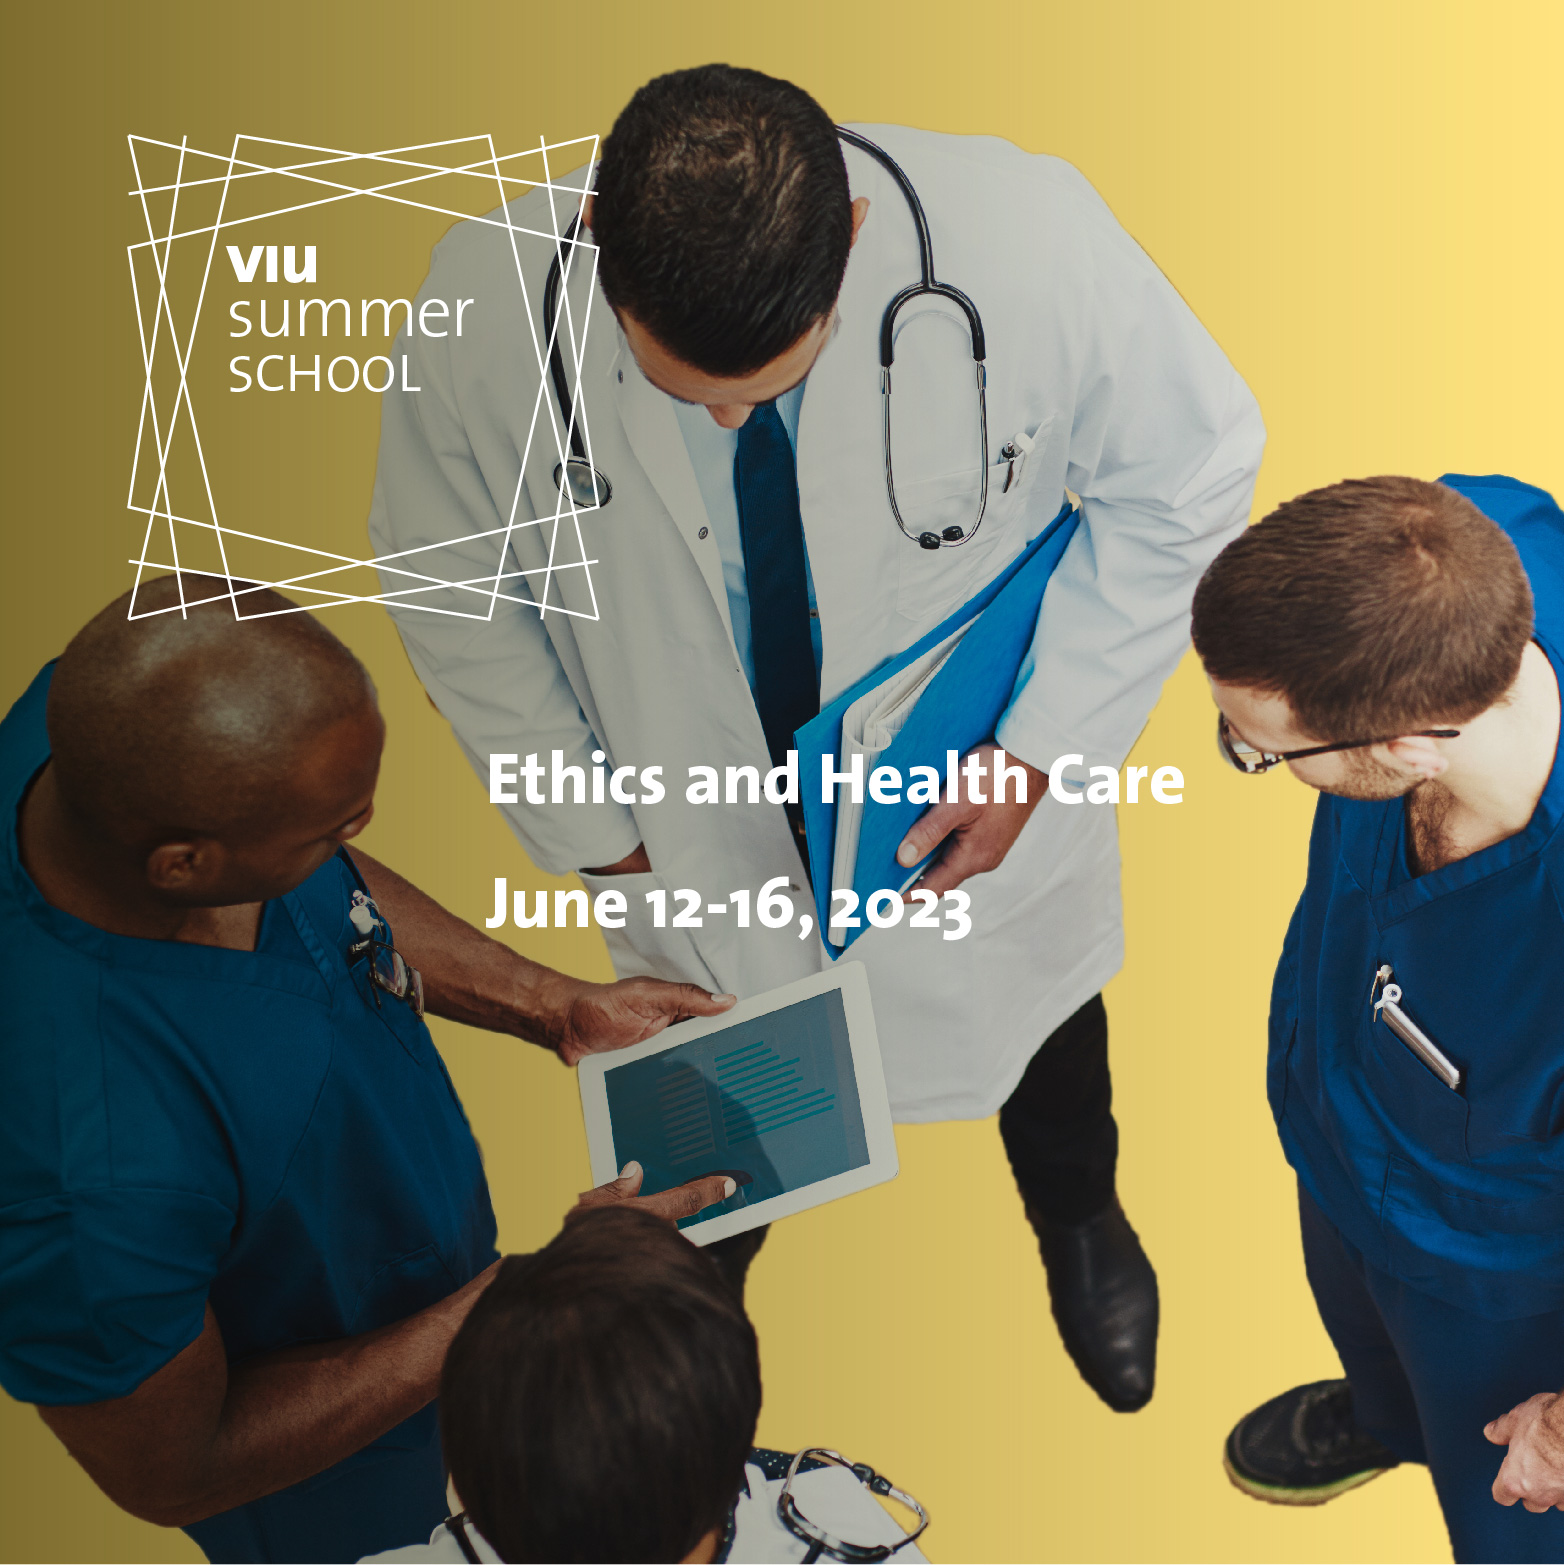 VIU Summer School Ethics and Health Care